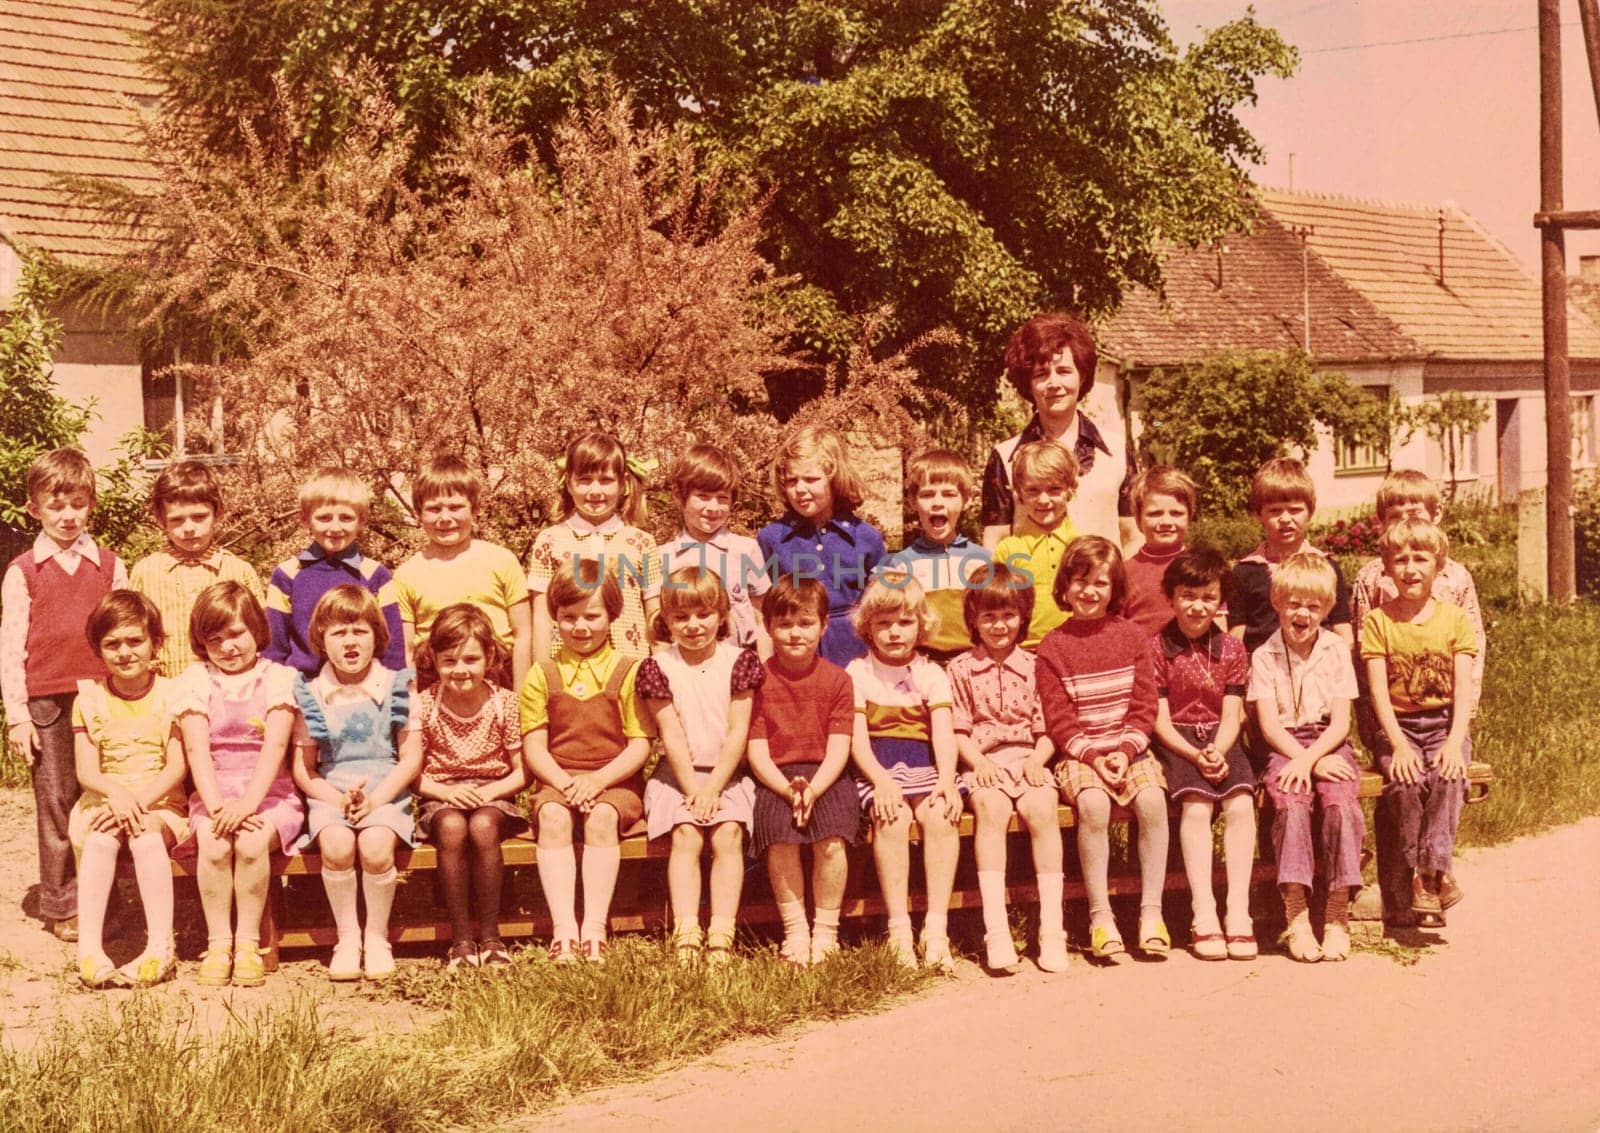 THE CZECHOSLOVAK SOCIALIST REPUBLIC - CIRCA 1980s: Retro photo shows pupils (schoolmates) and their female teacher. Color photo.